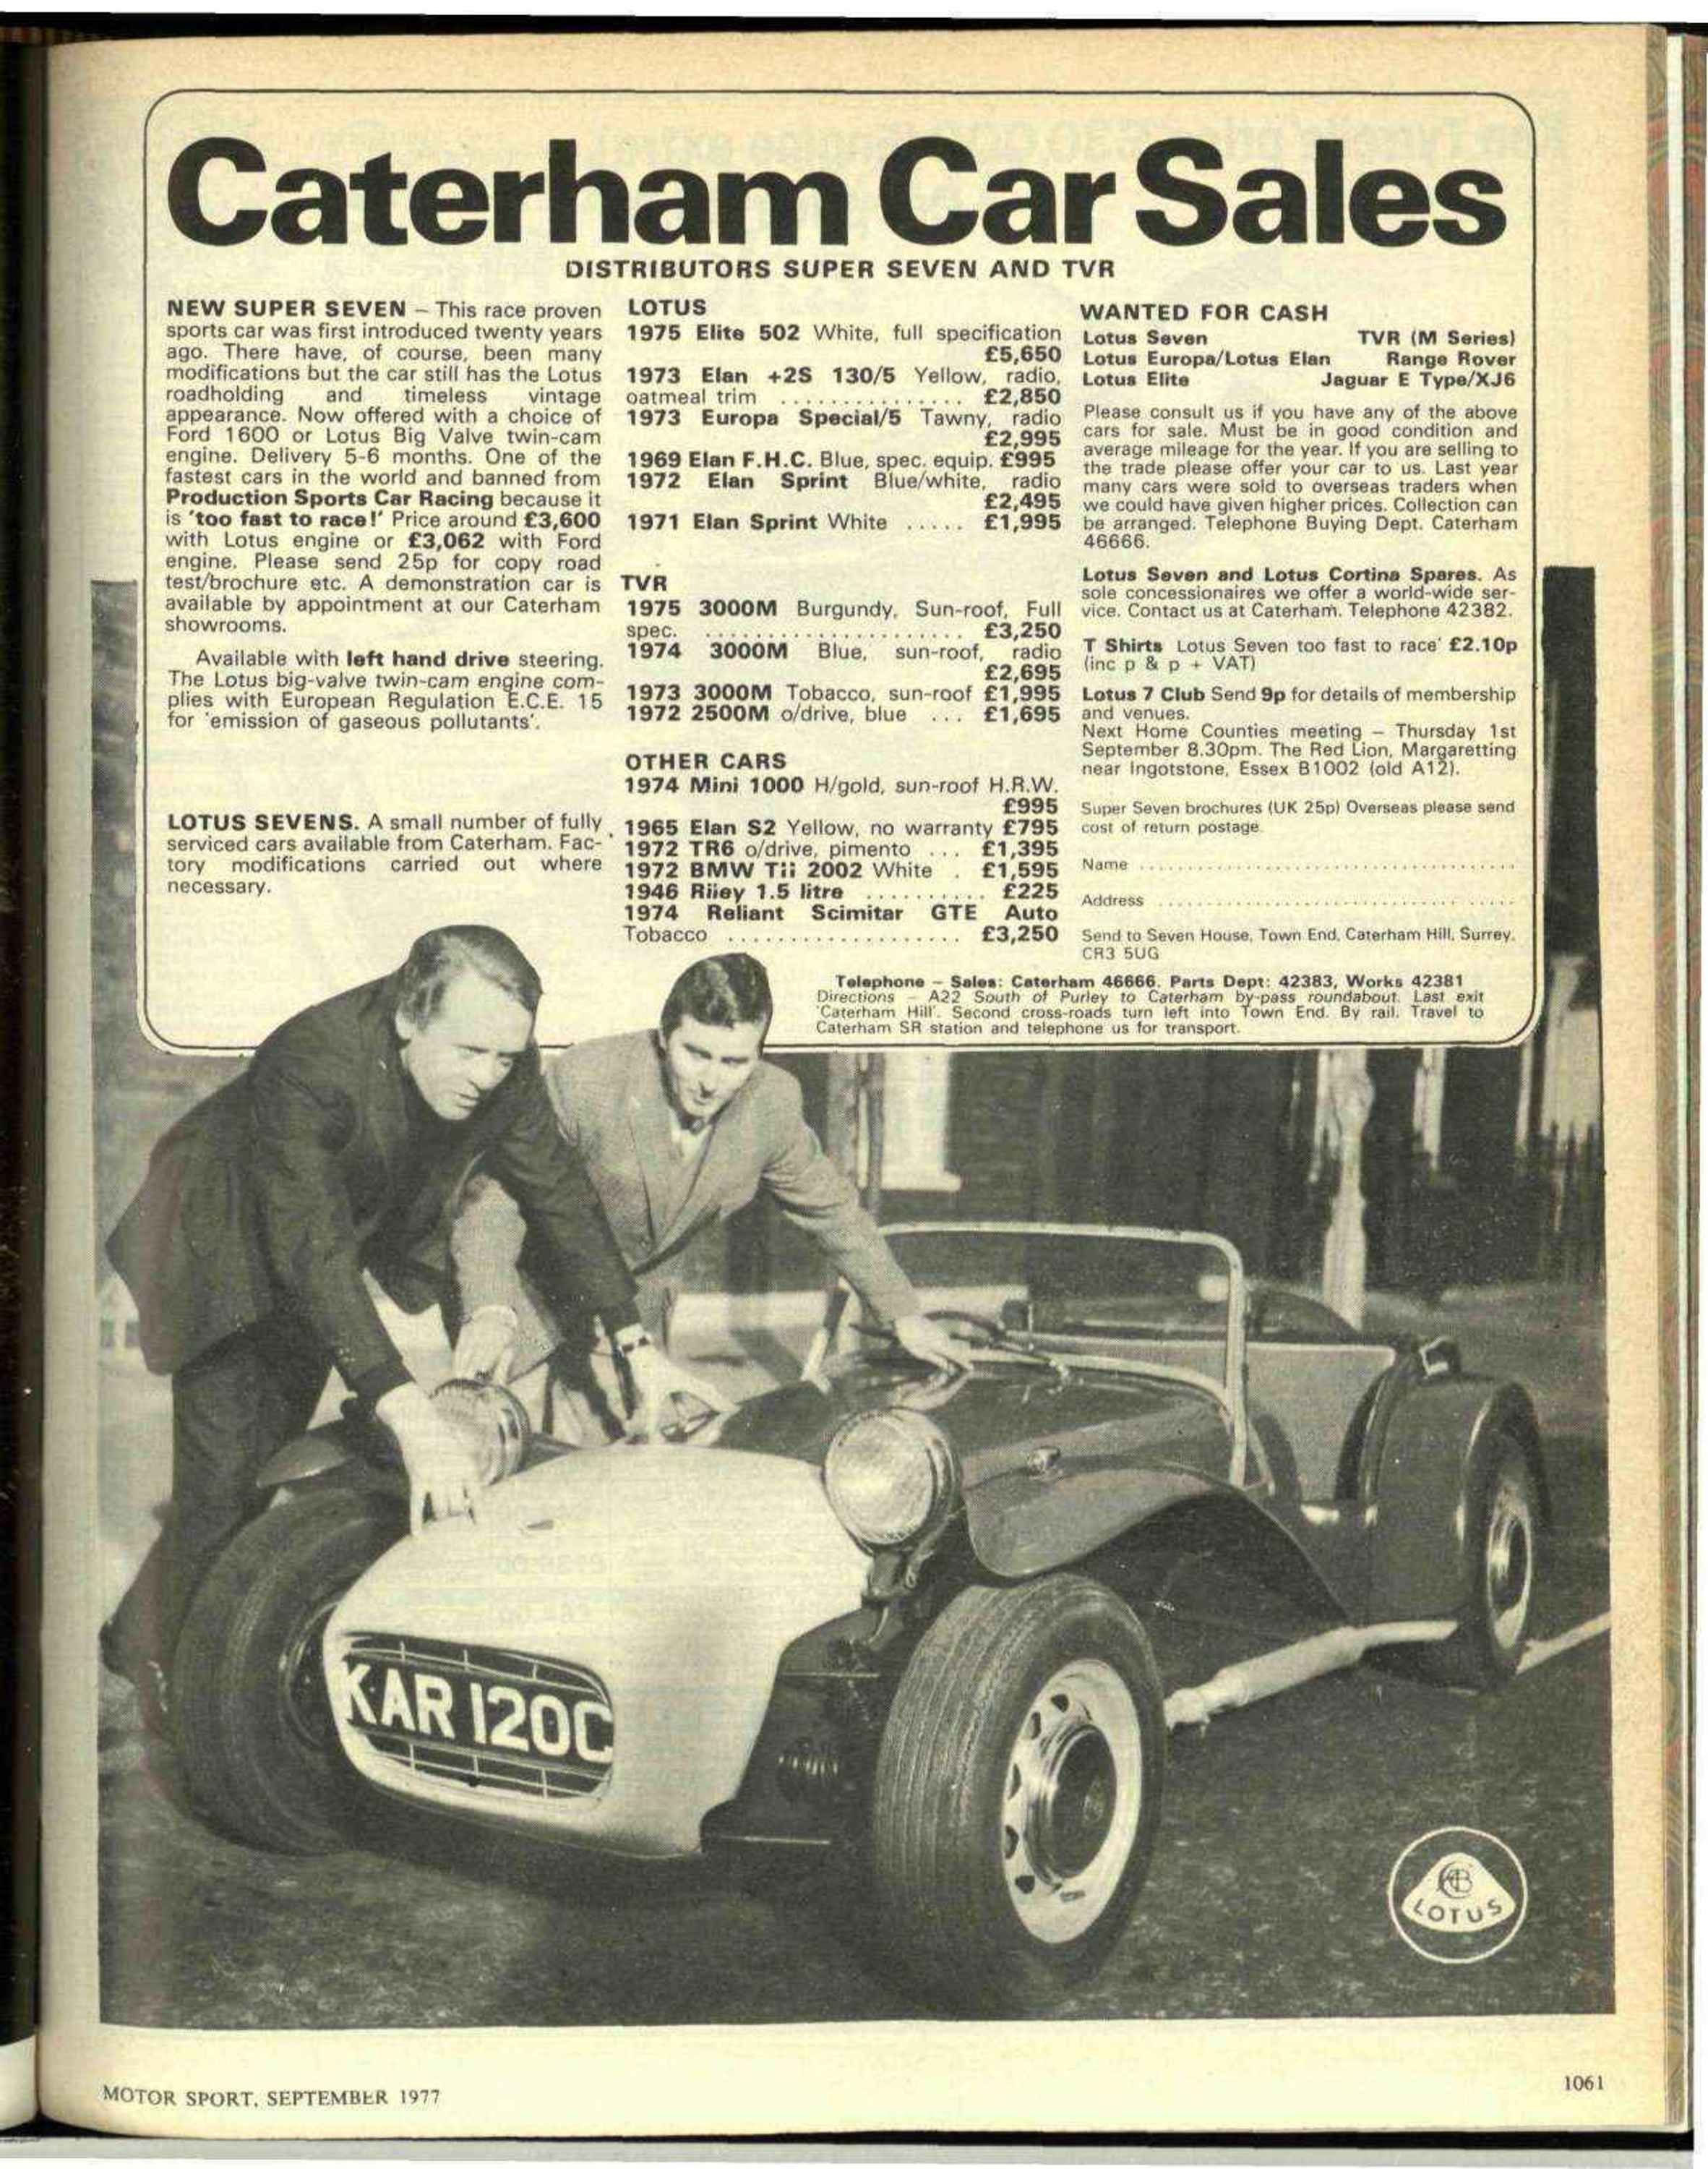 Germany's Championship September 1977 - Motor Sport Magazine